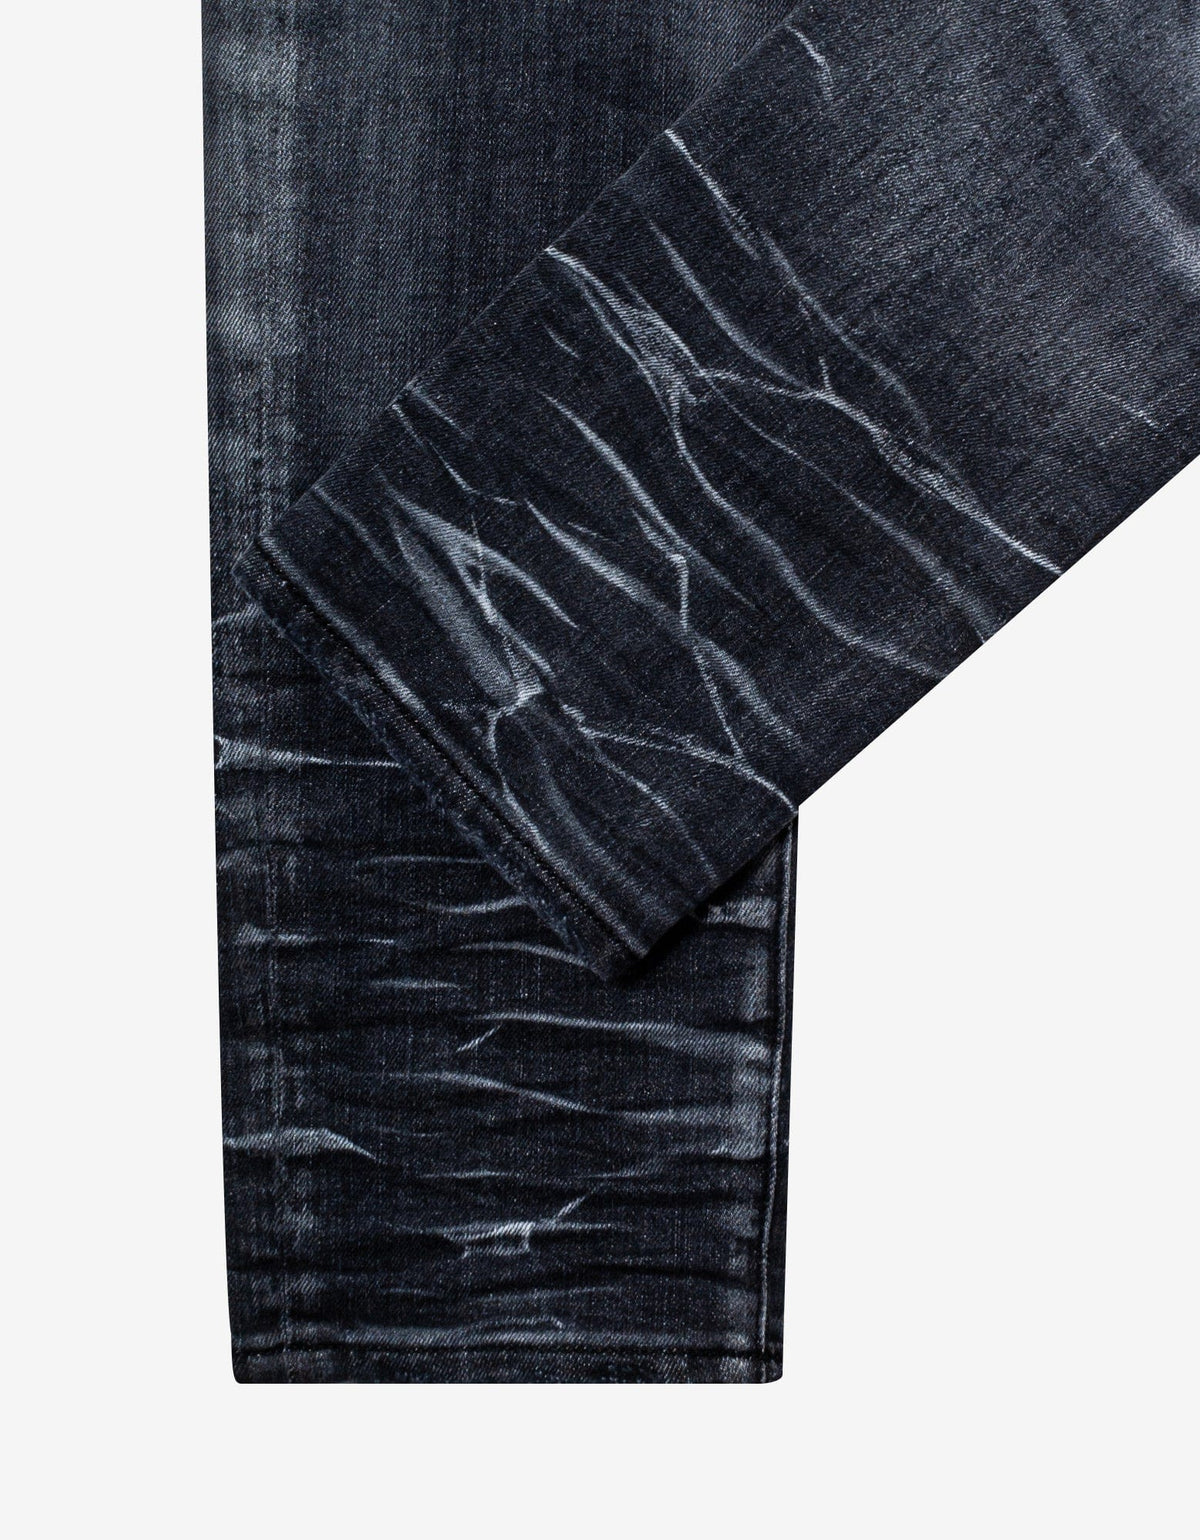 Amiri Grey Stack Jeans